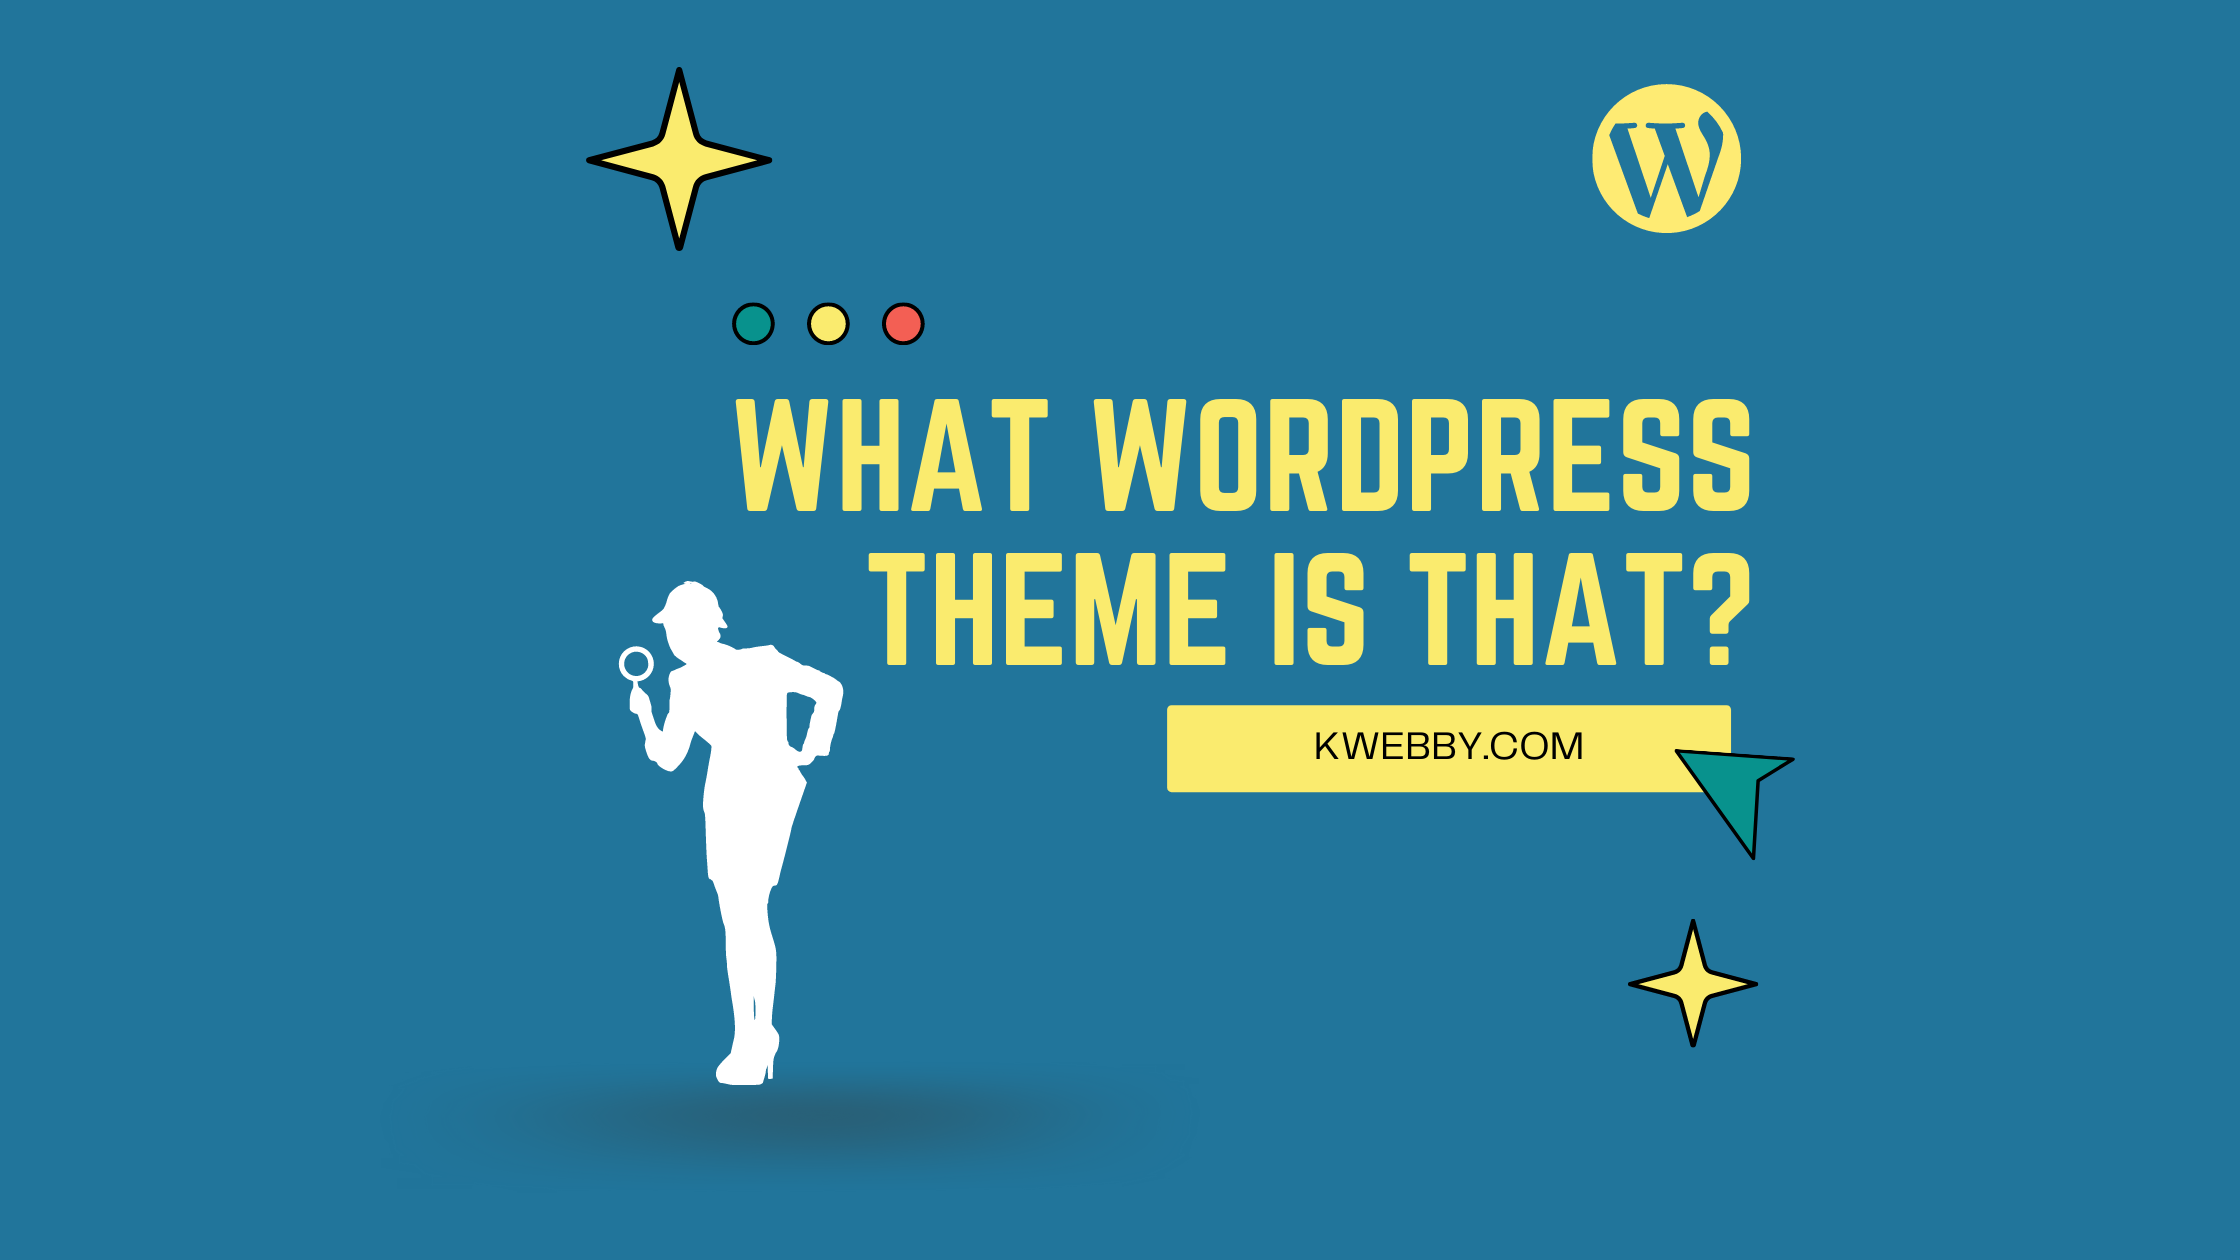 What WordPress theme is that?